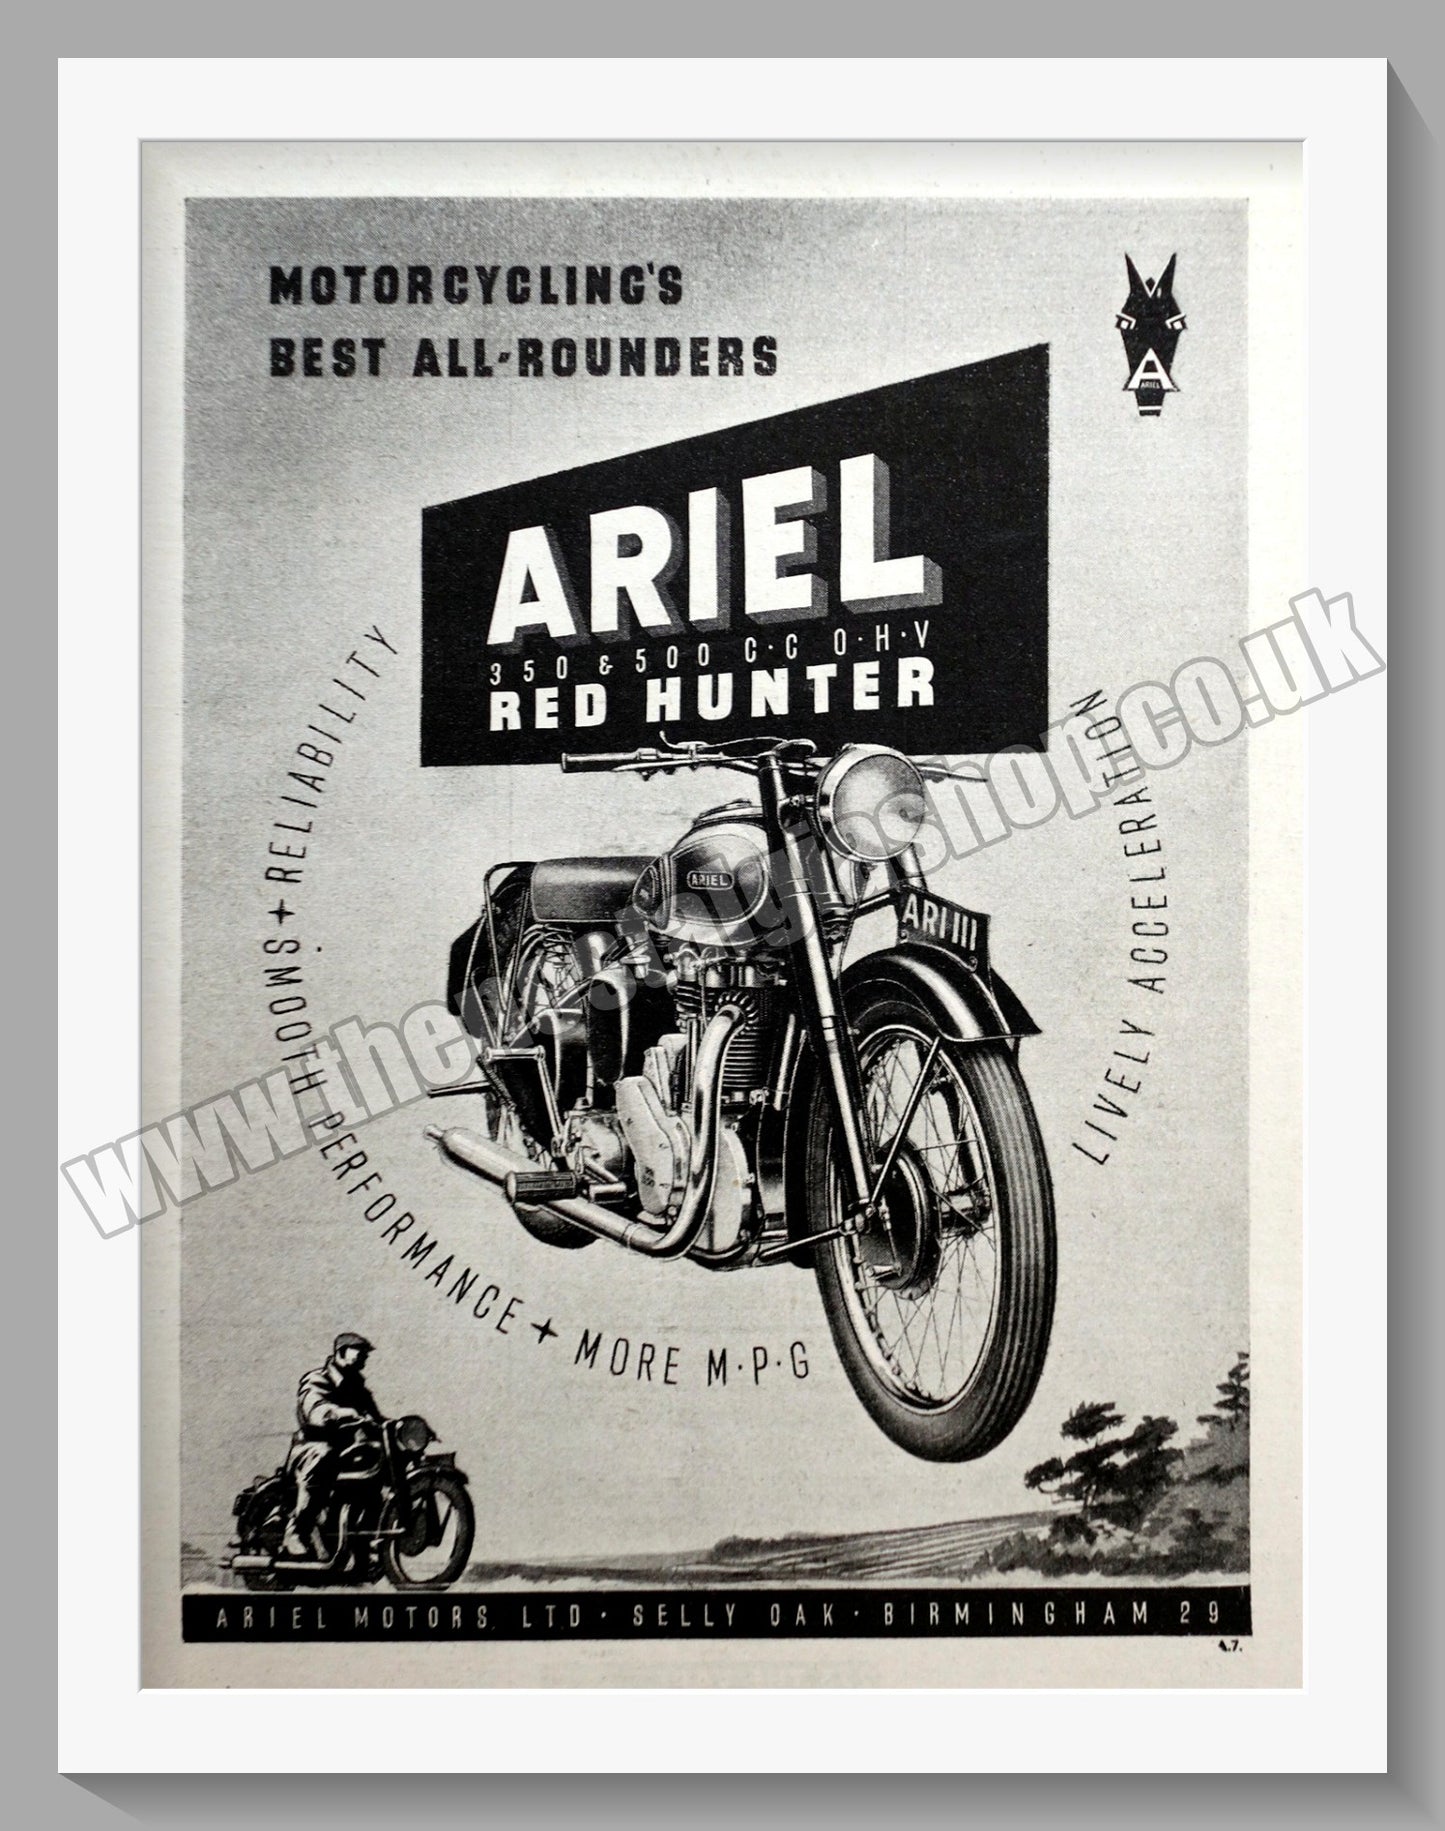 Ariel 350 & 500cc Red Hunter Motorcycles. Original Advert 1949 (ref AD60500)